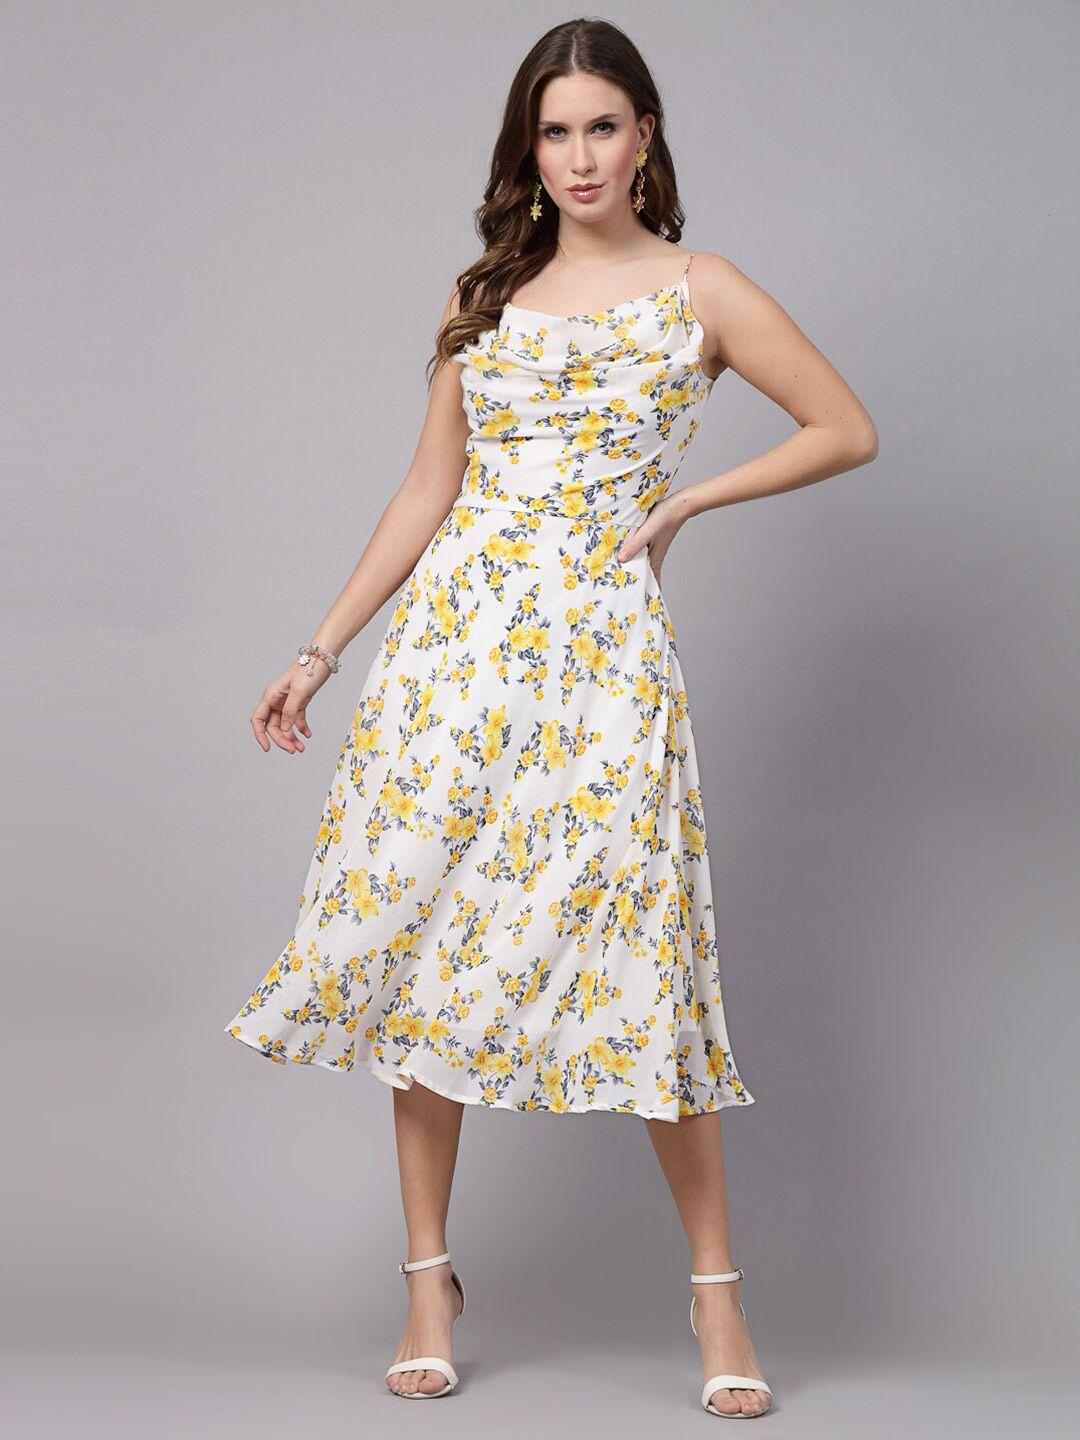 aayu Floral Printed Shoulder Straps Fit & Flare Georgette Midi Dress